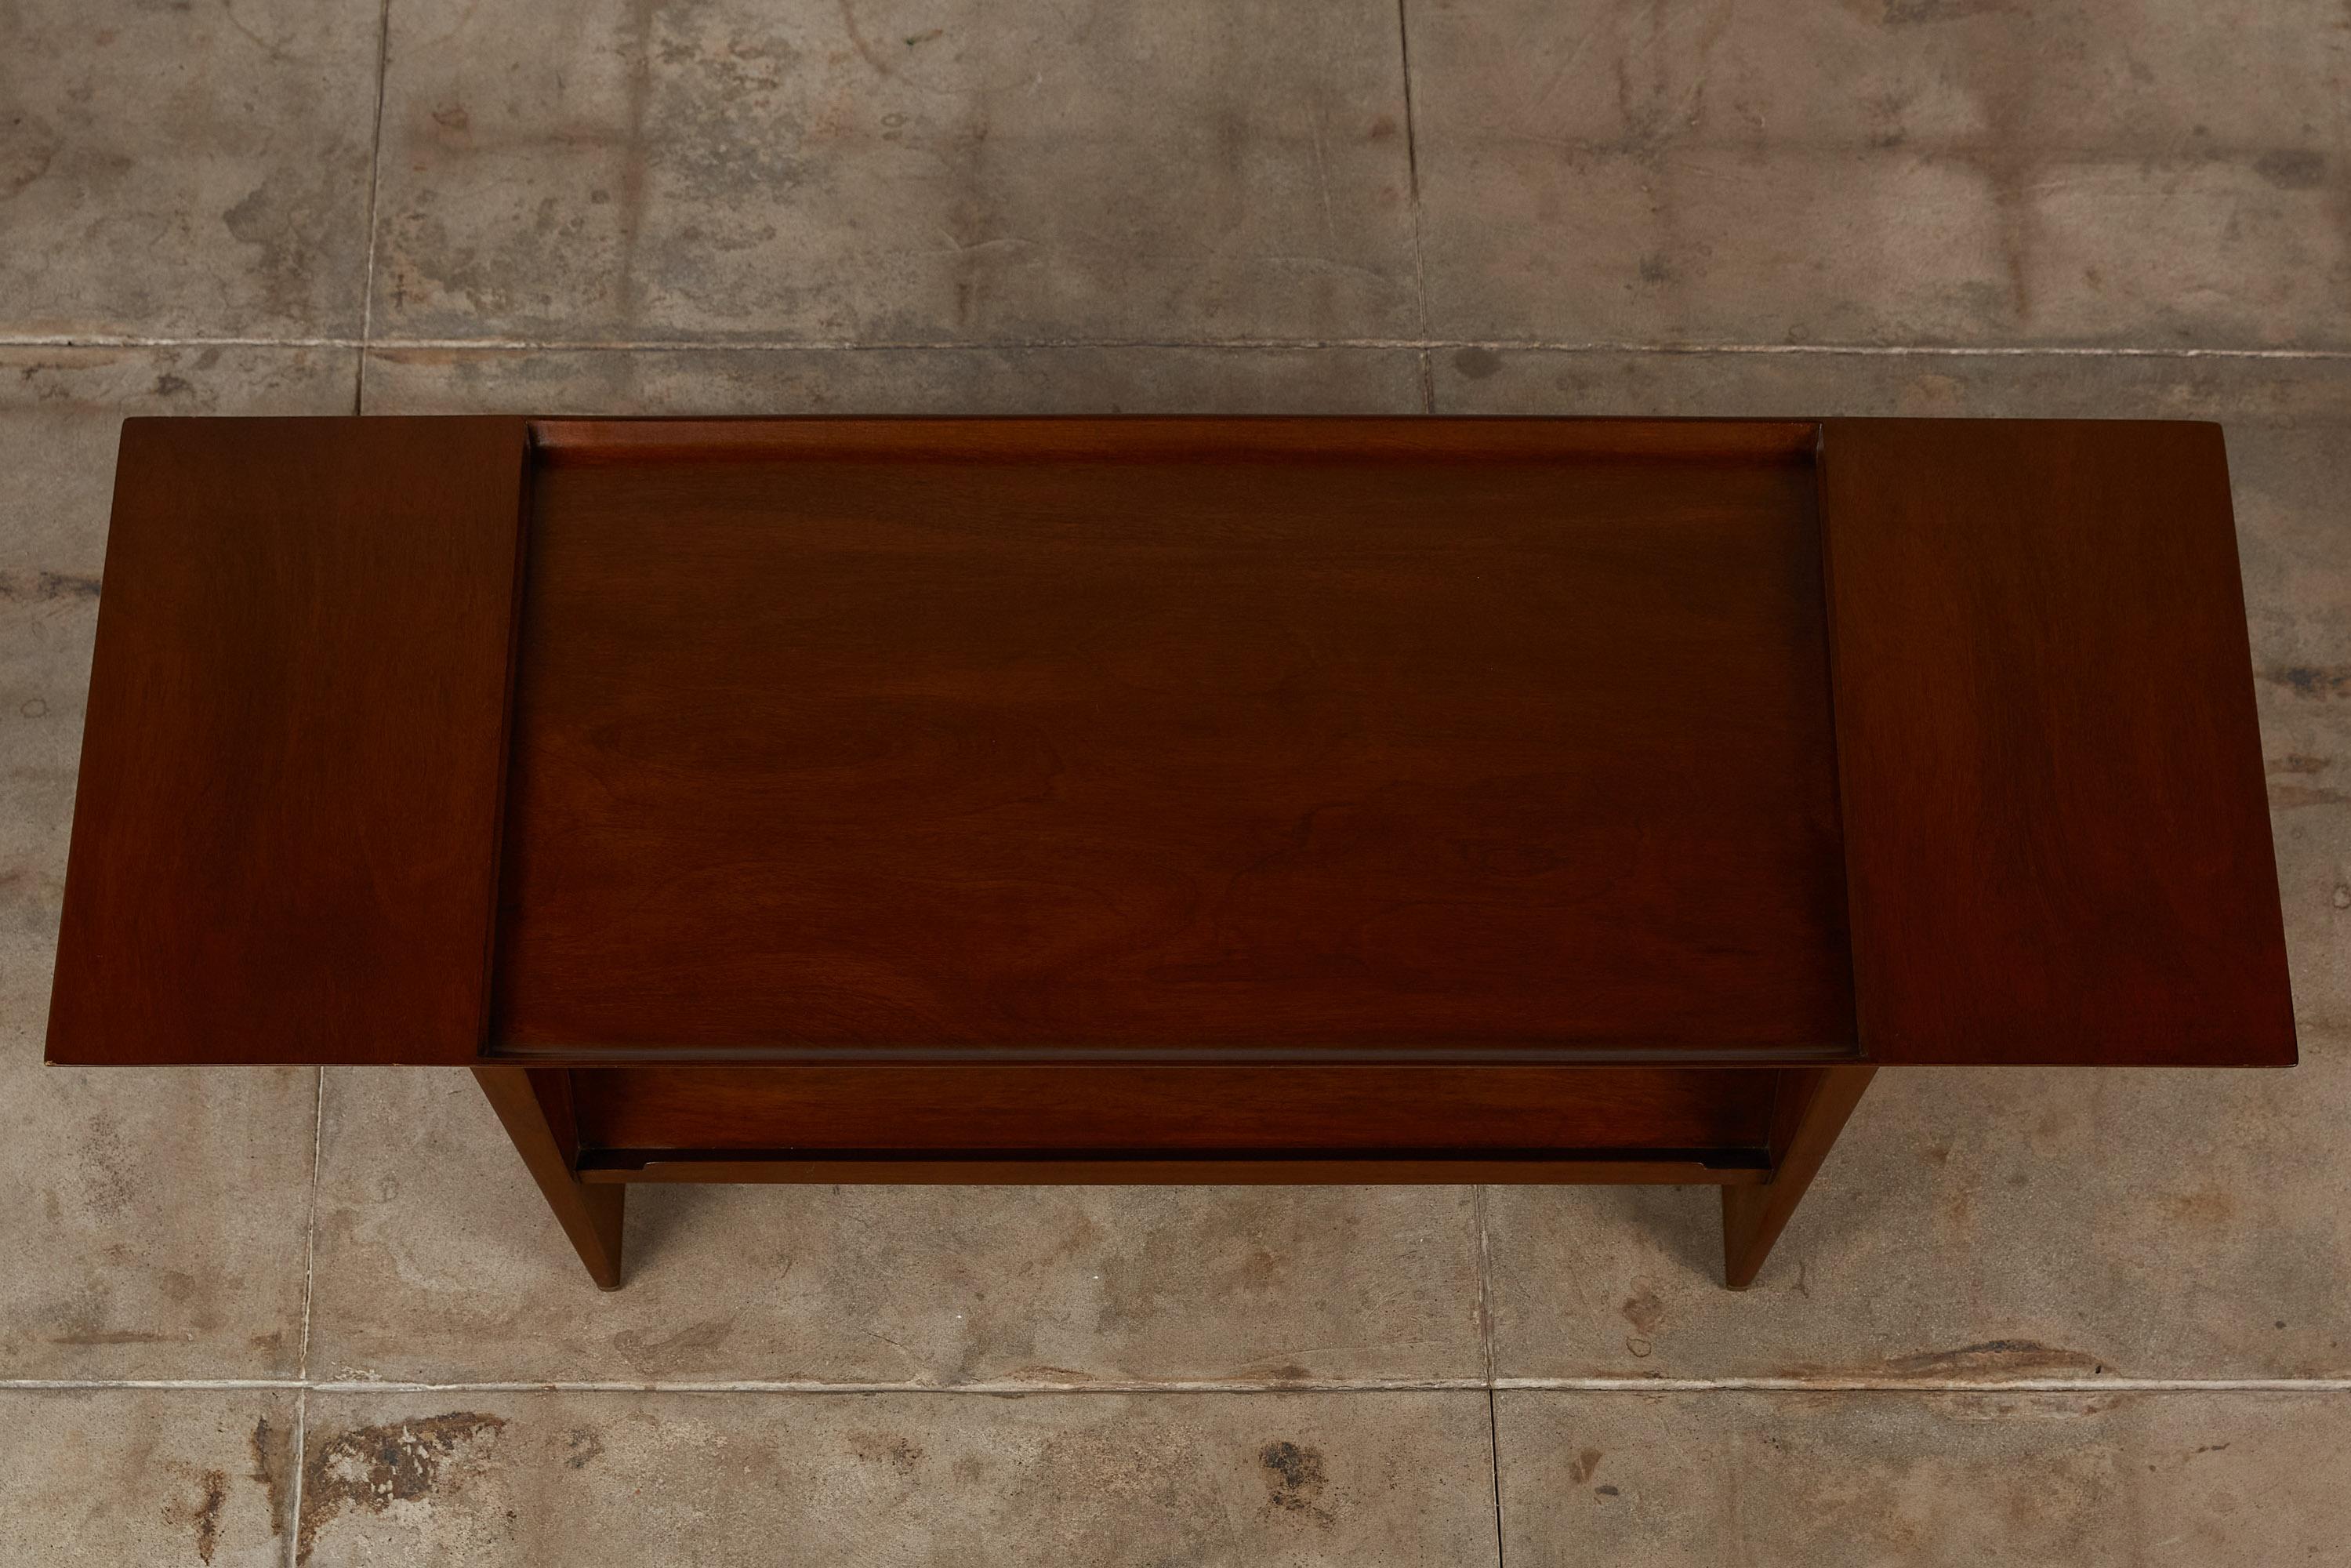 20th Century Coffee Table with Display Shelf by Edward Wormley for Dunbar